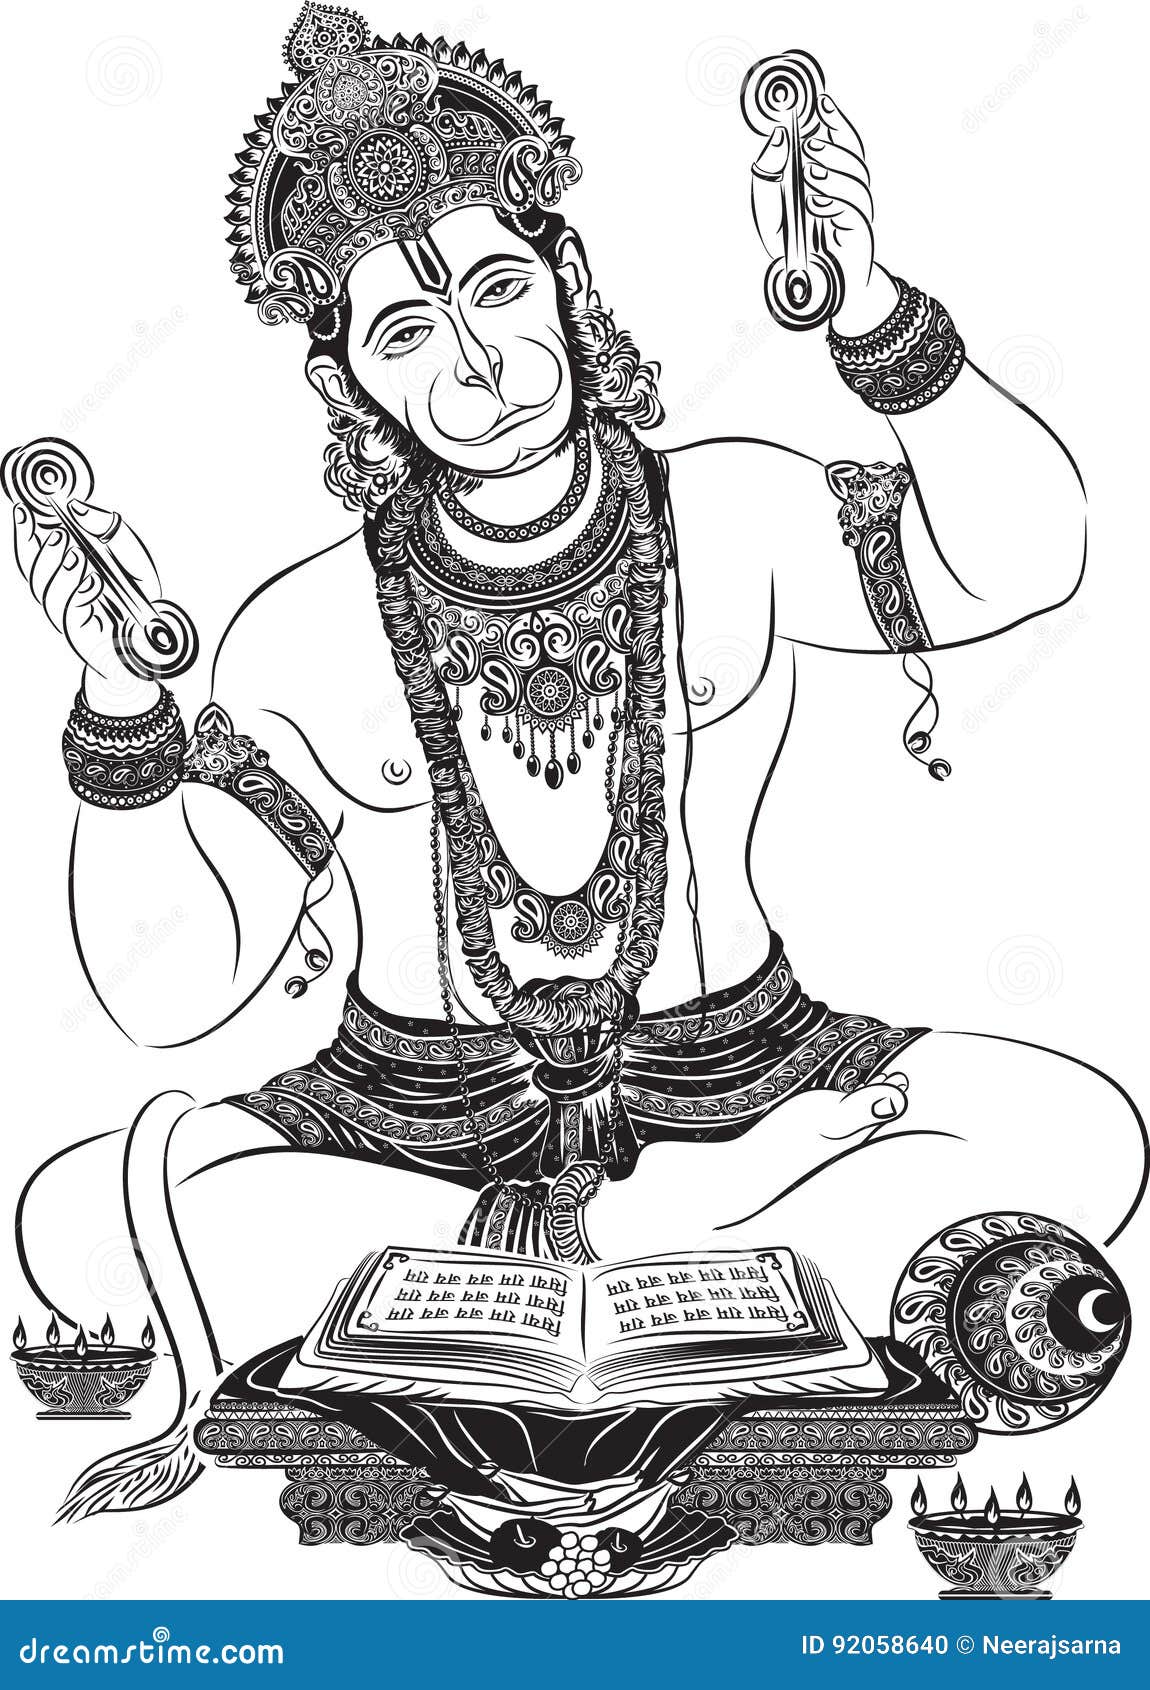 Marvelous Pencil Sketch Of Hanuman JI - Desi Painters